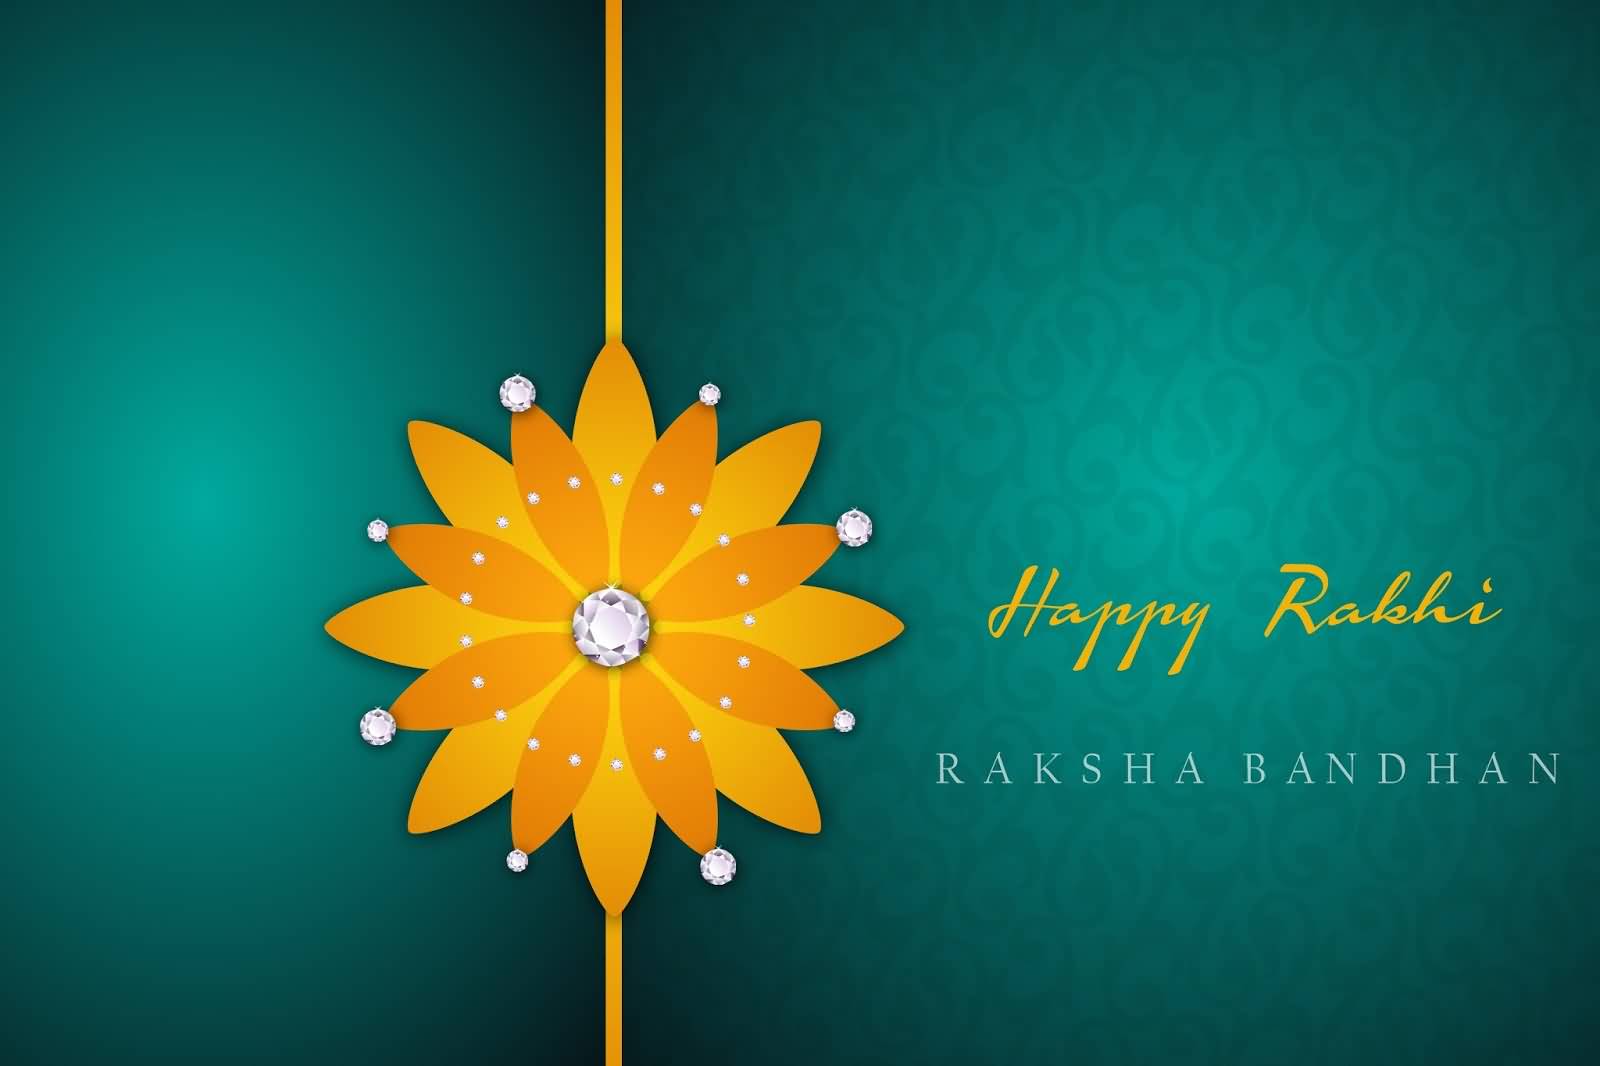 50+ Best Happy Raksha Bandhan 2017 Images And Photos